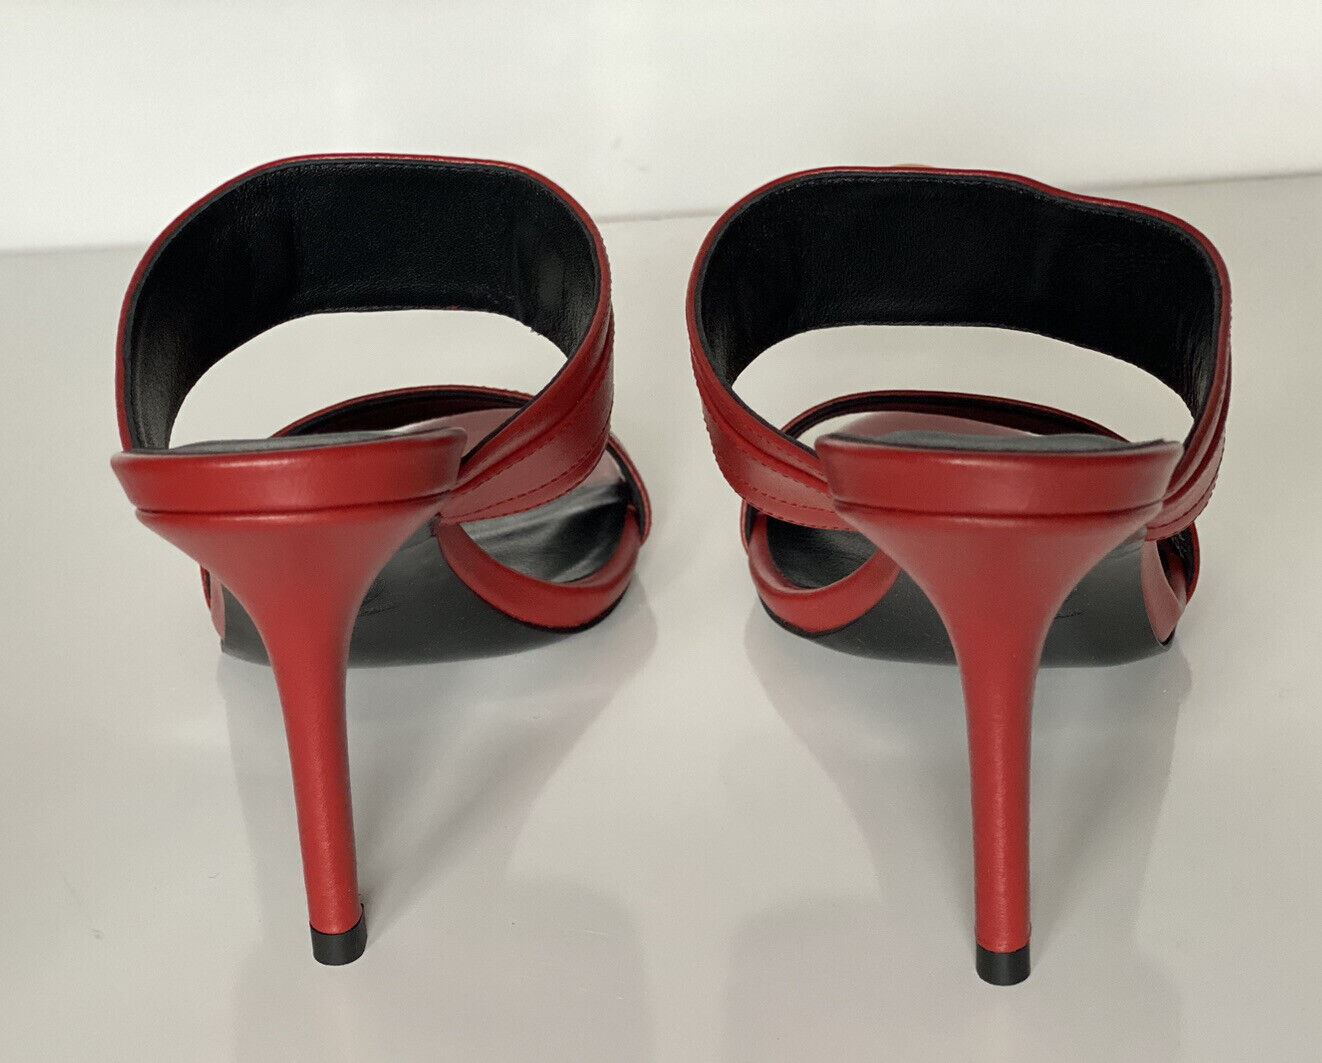 NIB VERSACE Medusa Damen Rote Pumps Sandalen 7 US (37 Euro) Hergestellt in Italien D1NPS 